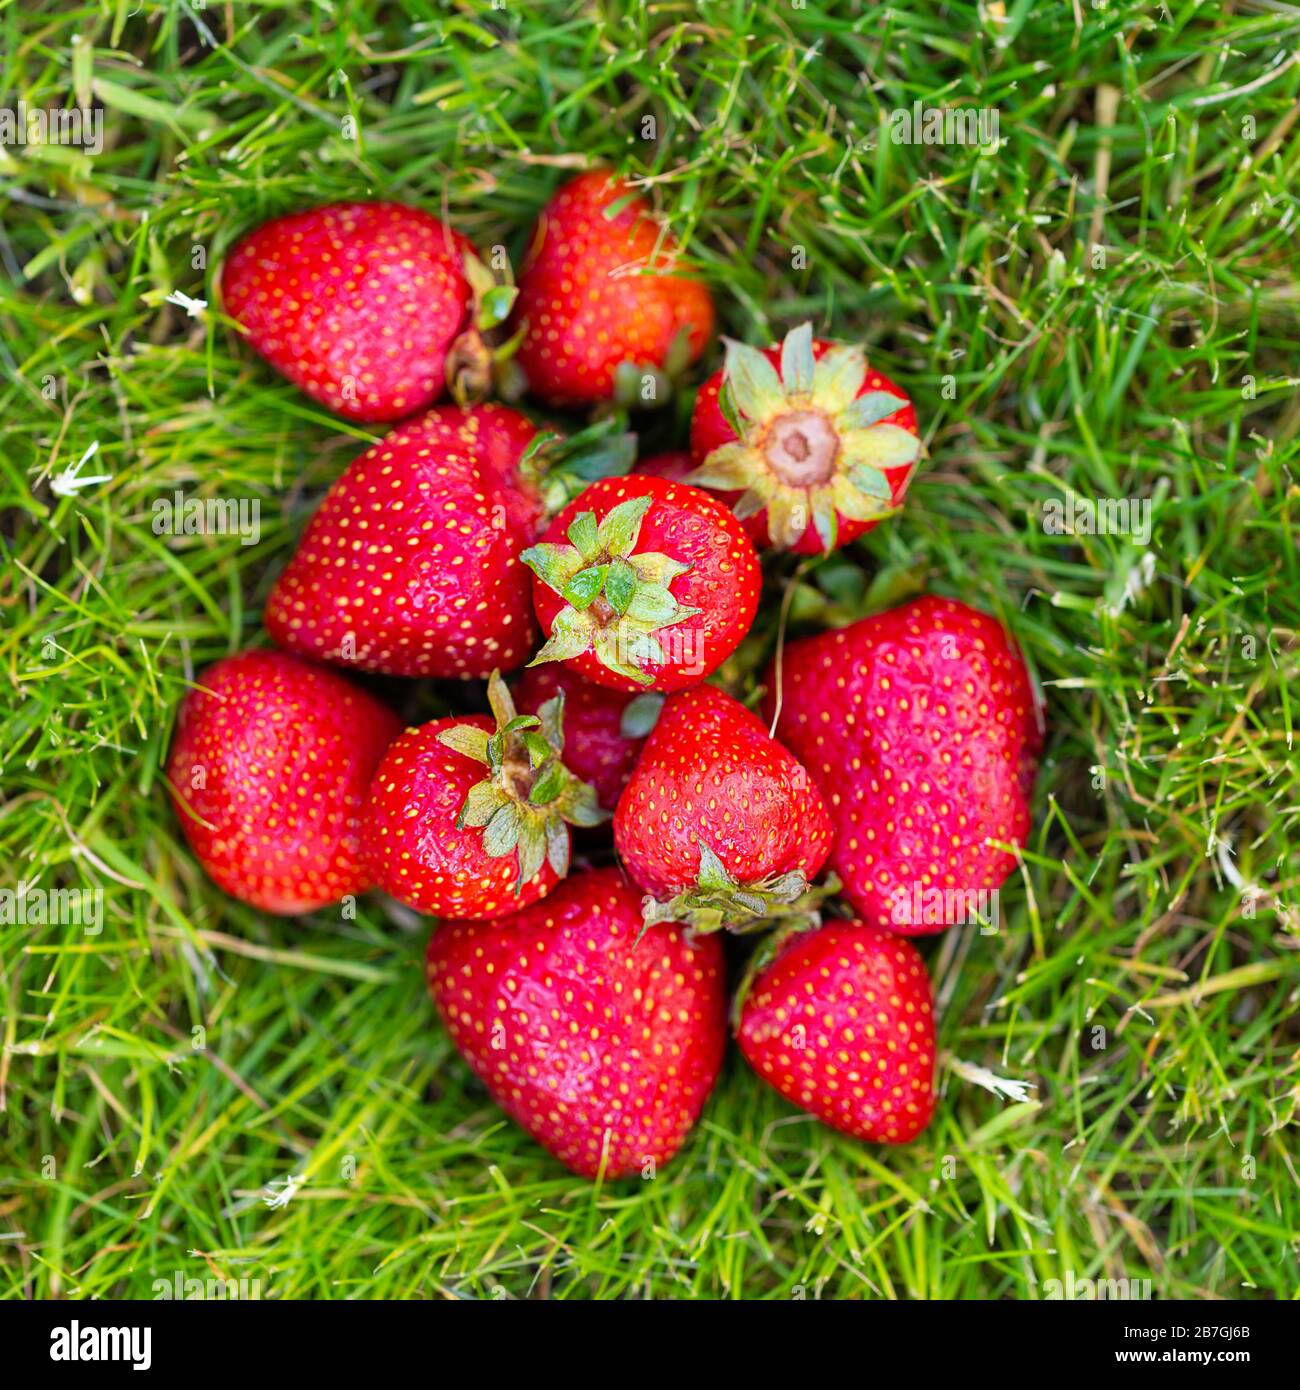 Ripe strawberries lying in green grass Stock Photo